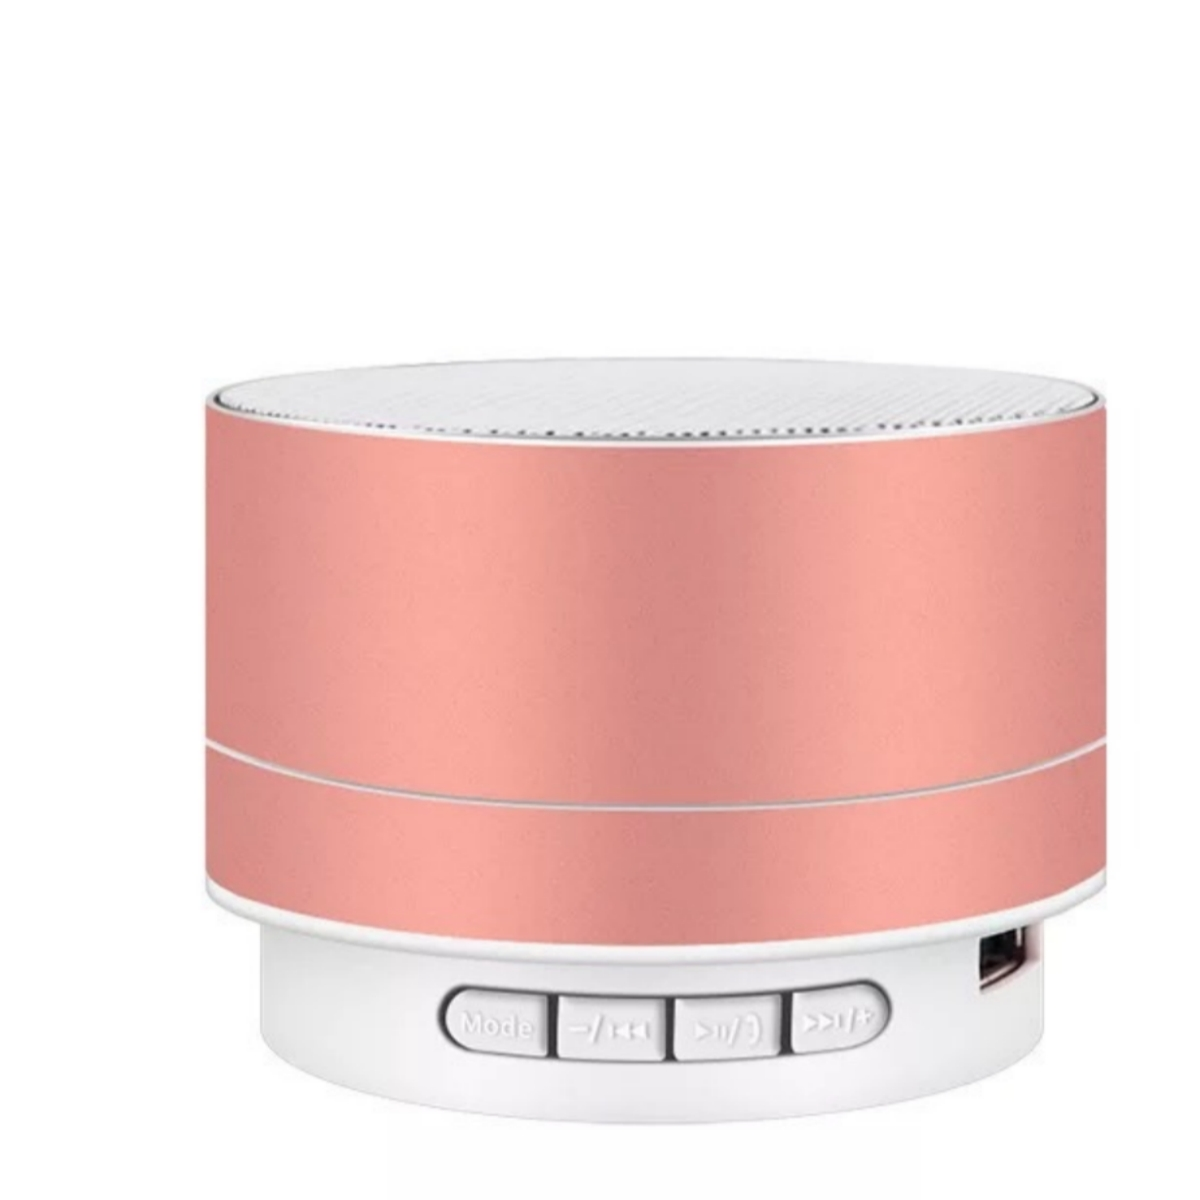 SHAOKE Bluetooth-Lautsprecher Rosa - Lautsprecher, Hochwertig Bluetooth Kompakt Tragbar Surround-Sound 360°